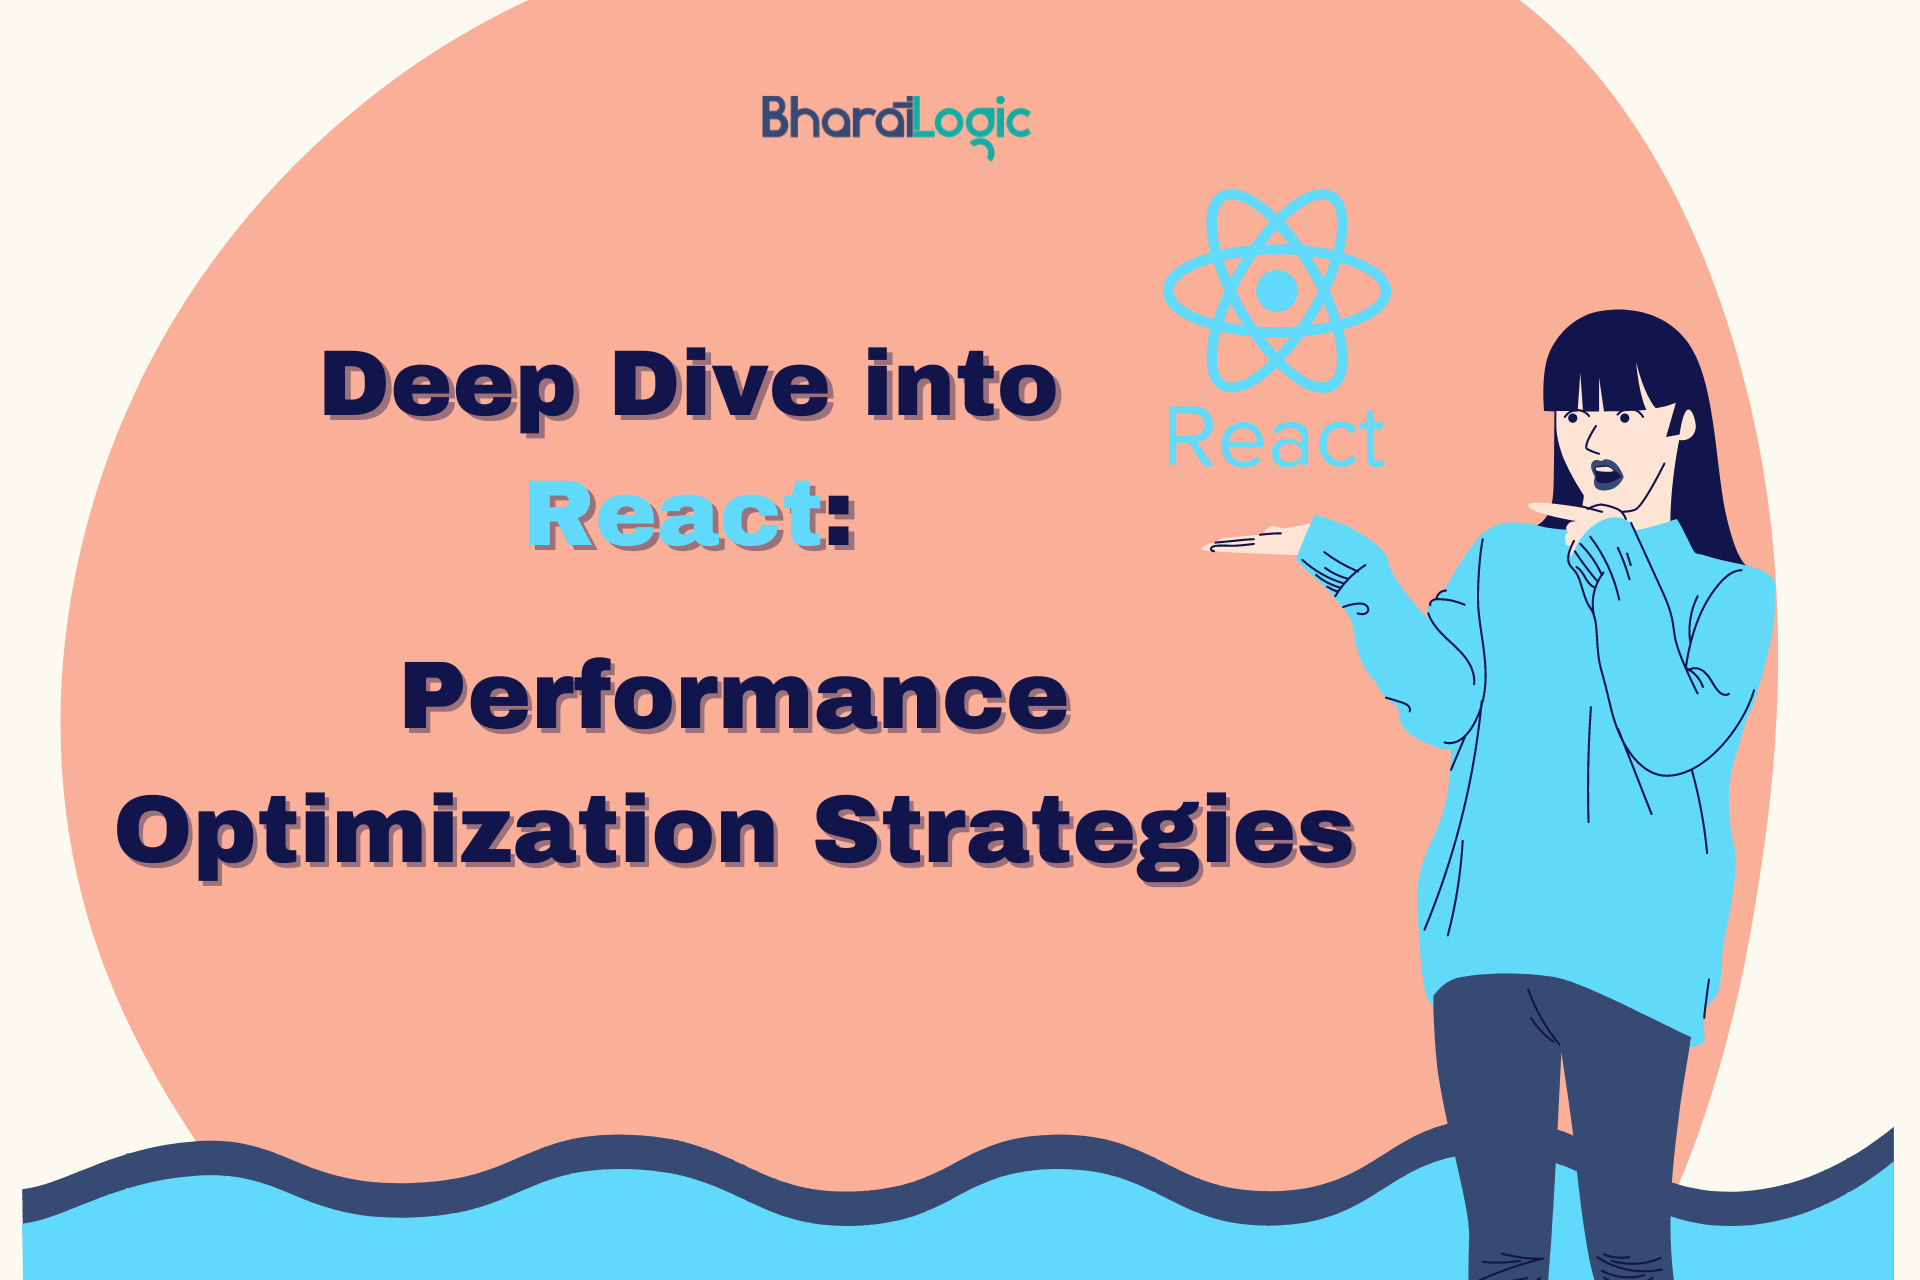 Deep Dive into React: Performance Optimization Strategies